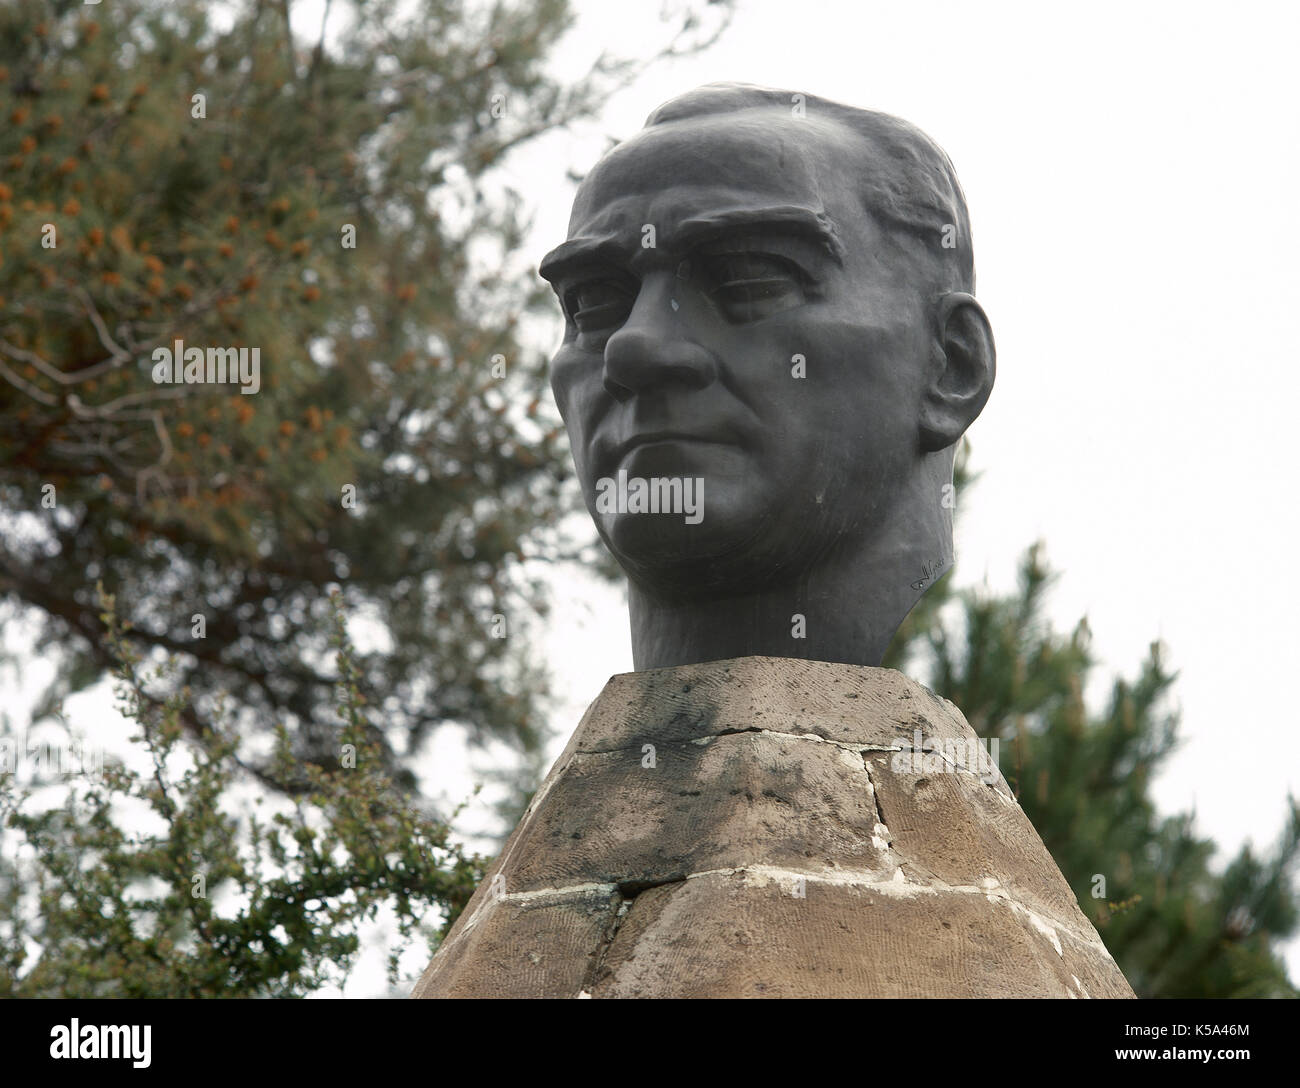 Mustafa Kemal Atatürk (1881-1938). Türkische Armee Offizier, Revolutionär und Gründer der Republik Türkei. Skulptur. Kappadokien, Türkei. Stockfoto